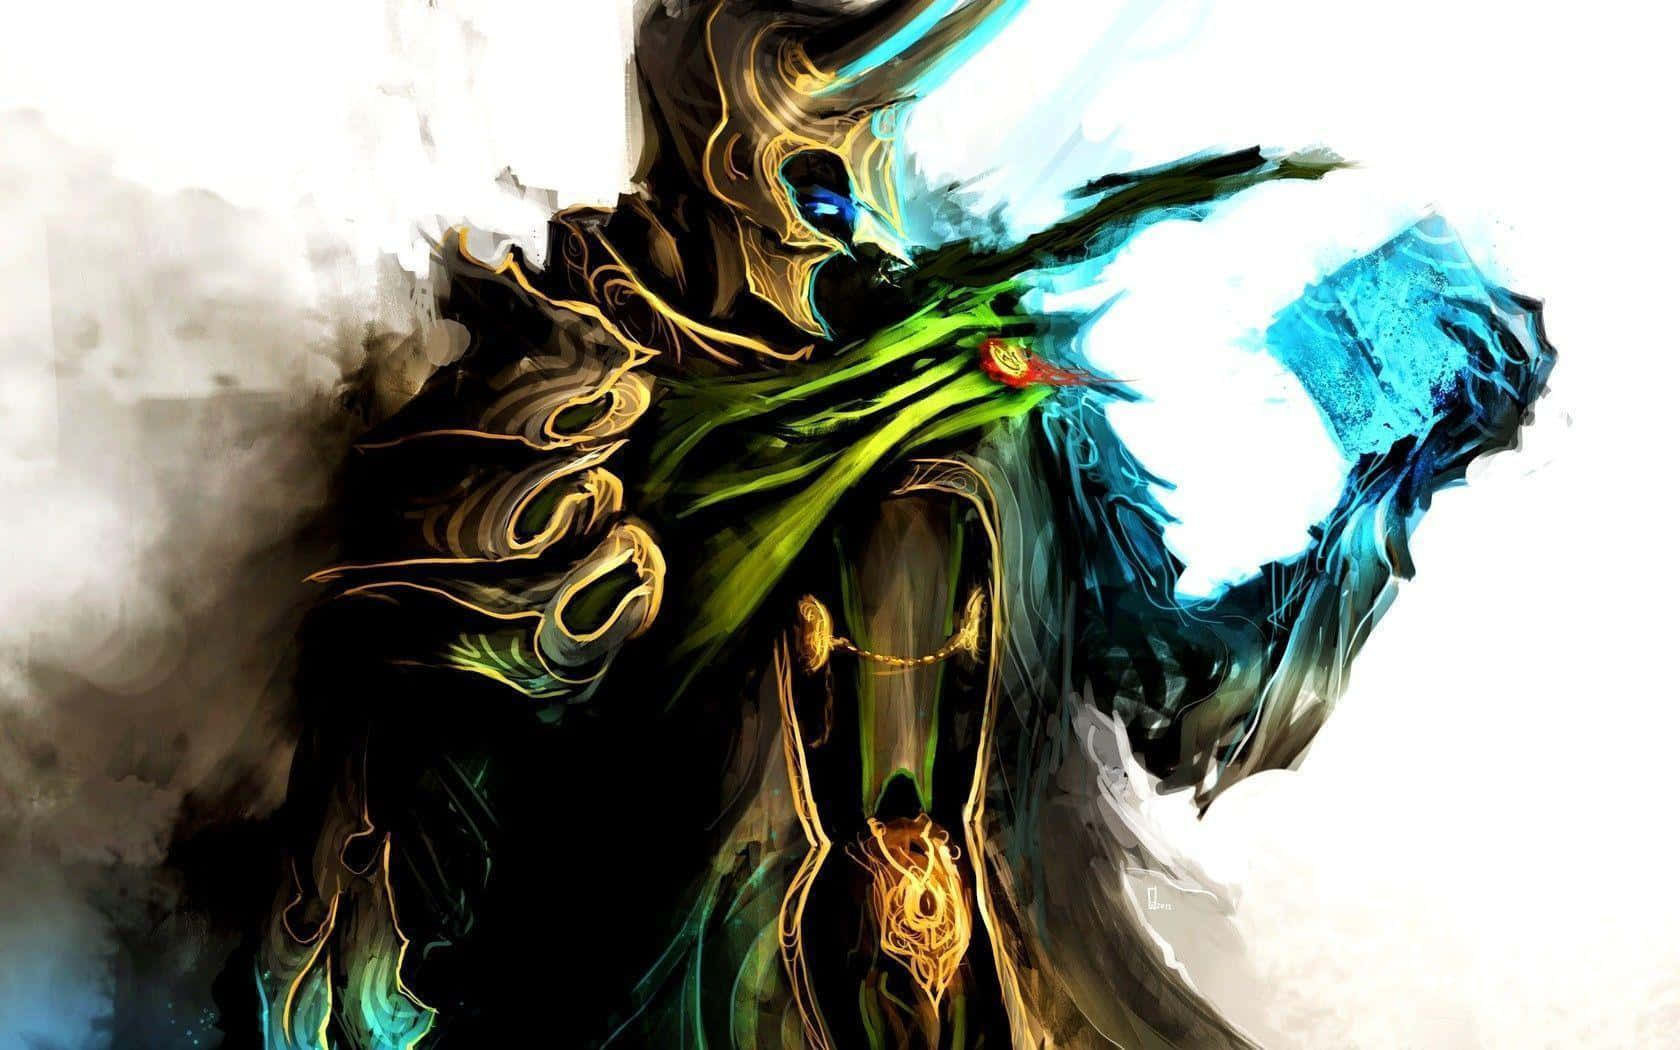 Odin's adoptivsøn, Loki, i den klassiske Marvel tegneseriehistorie. Wallpaper